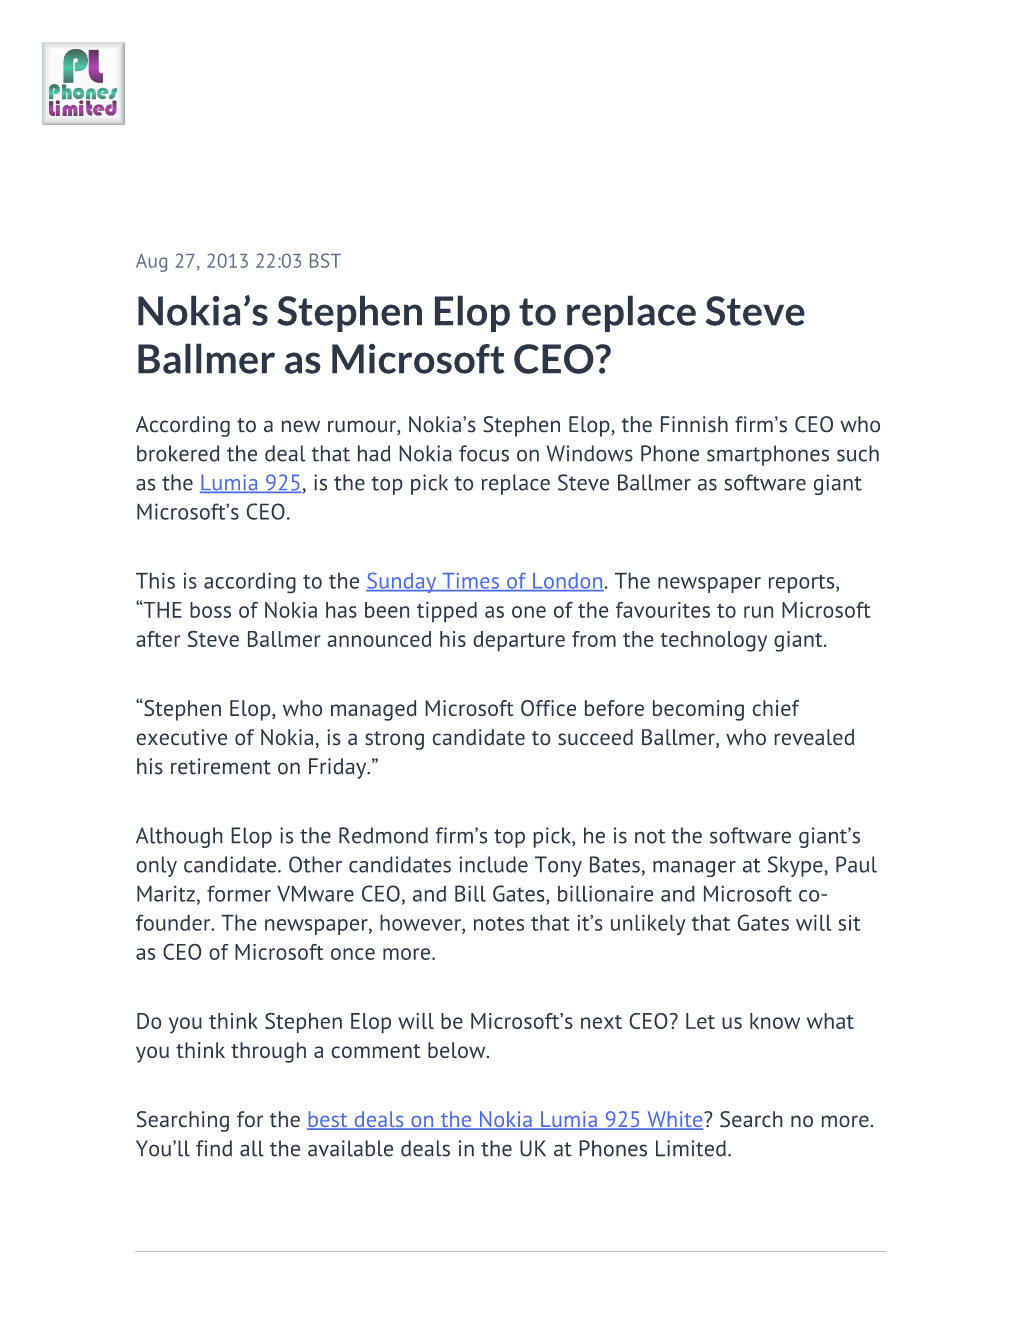 Nokia's Stephen Elop to Replace Steve Ballmer As Microsoft CEO?